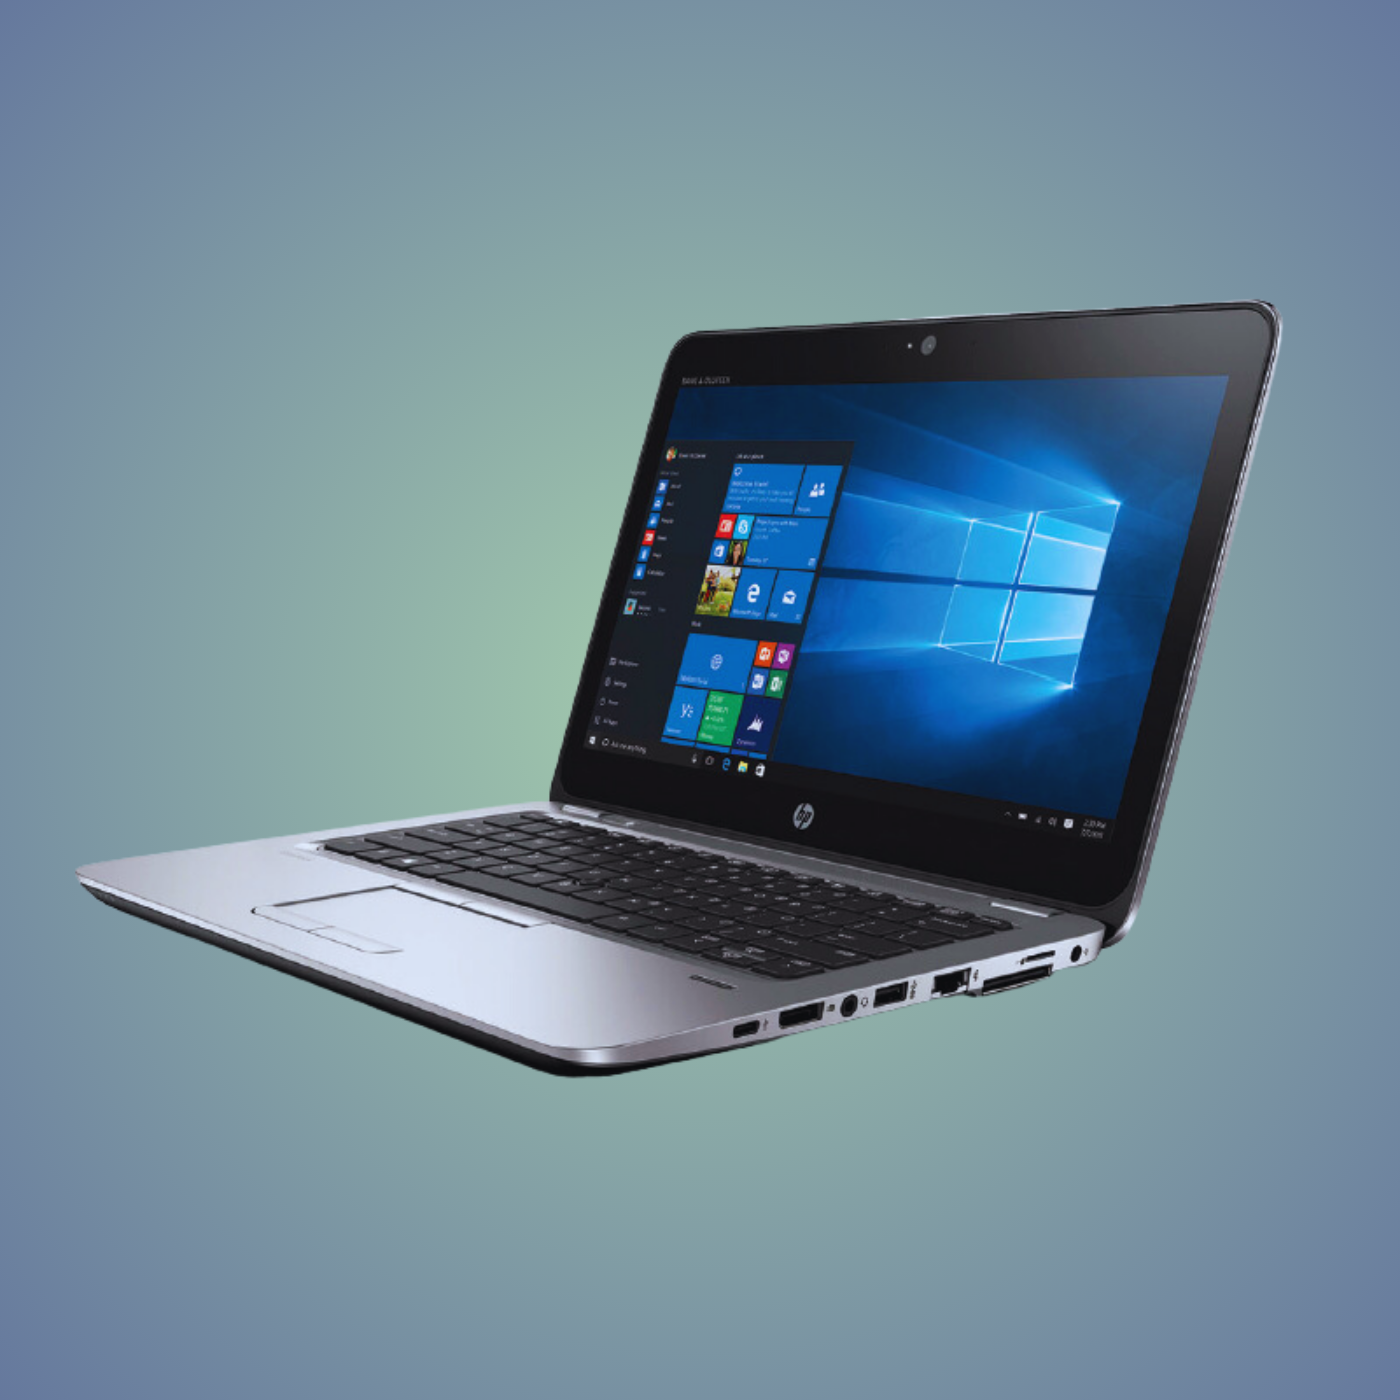 HP EliteBook 820 G3 Core I7: A Durable & Powerful Ultrabook